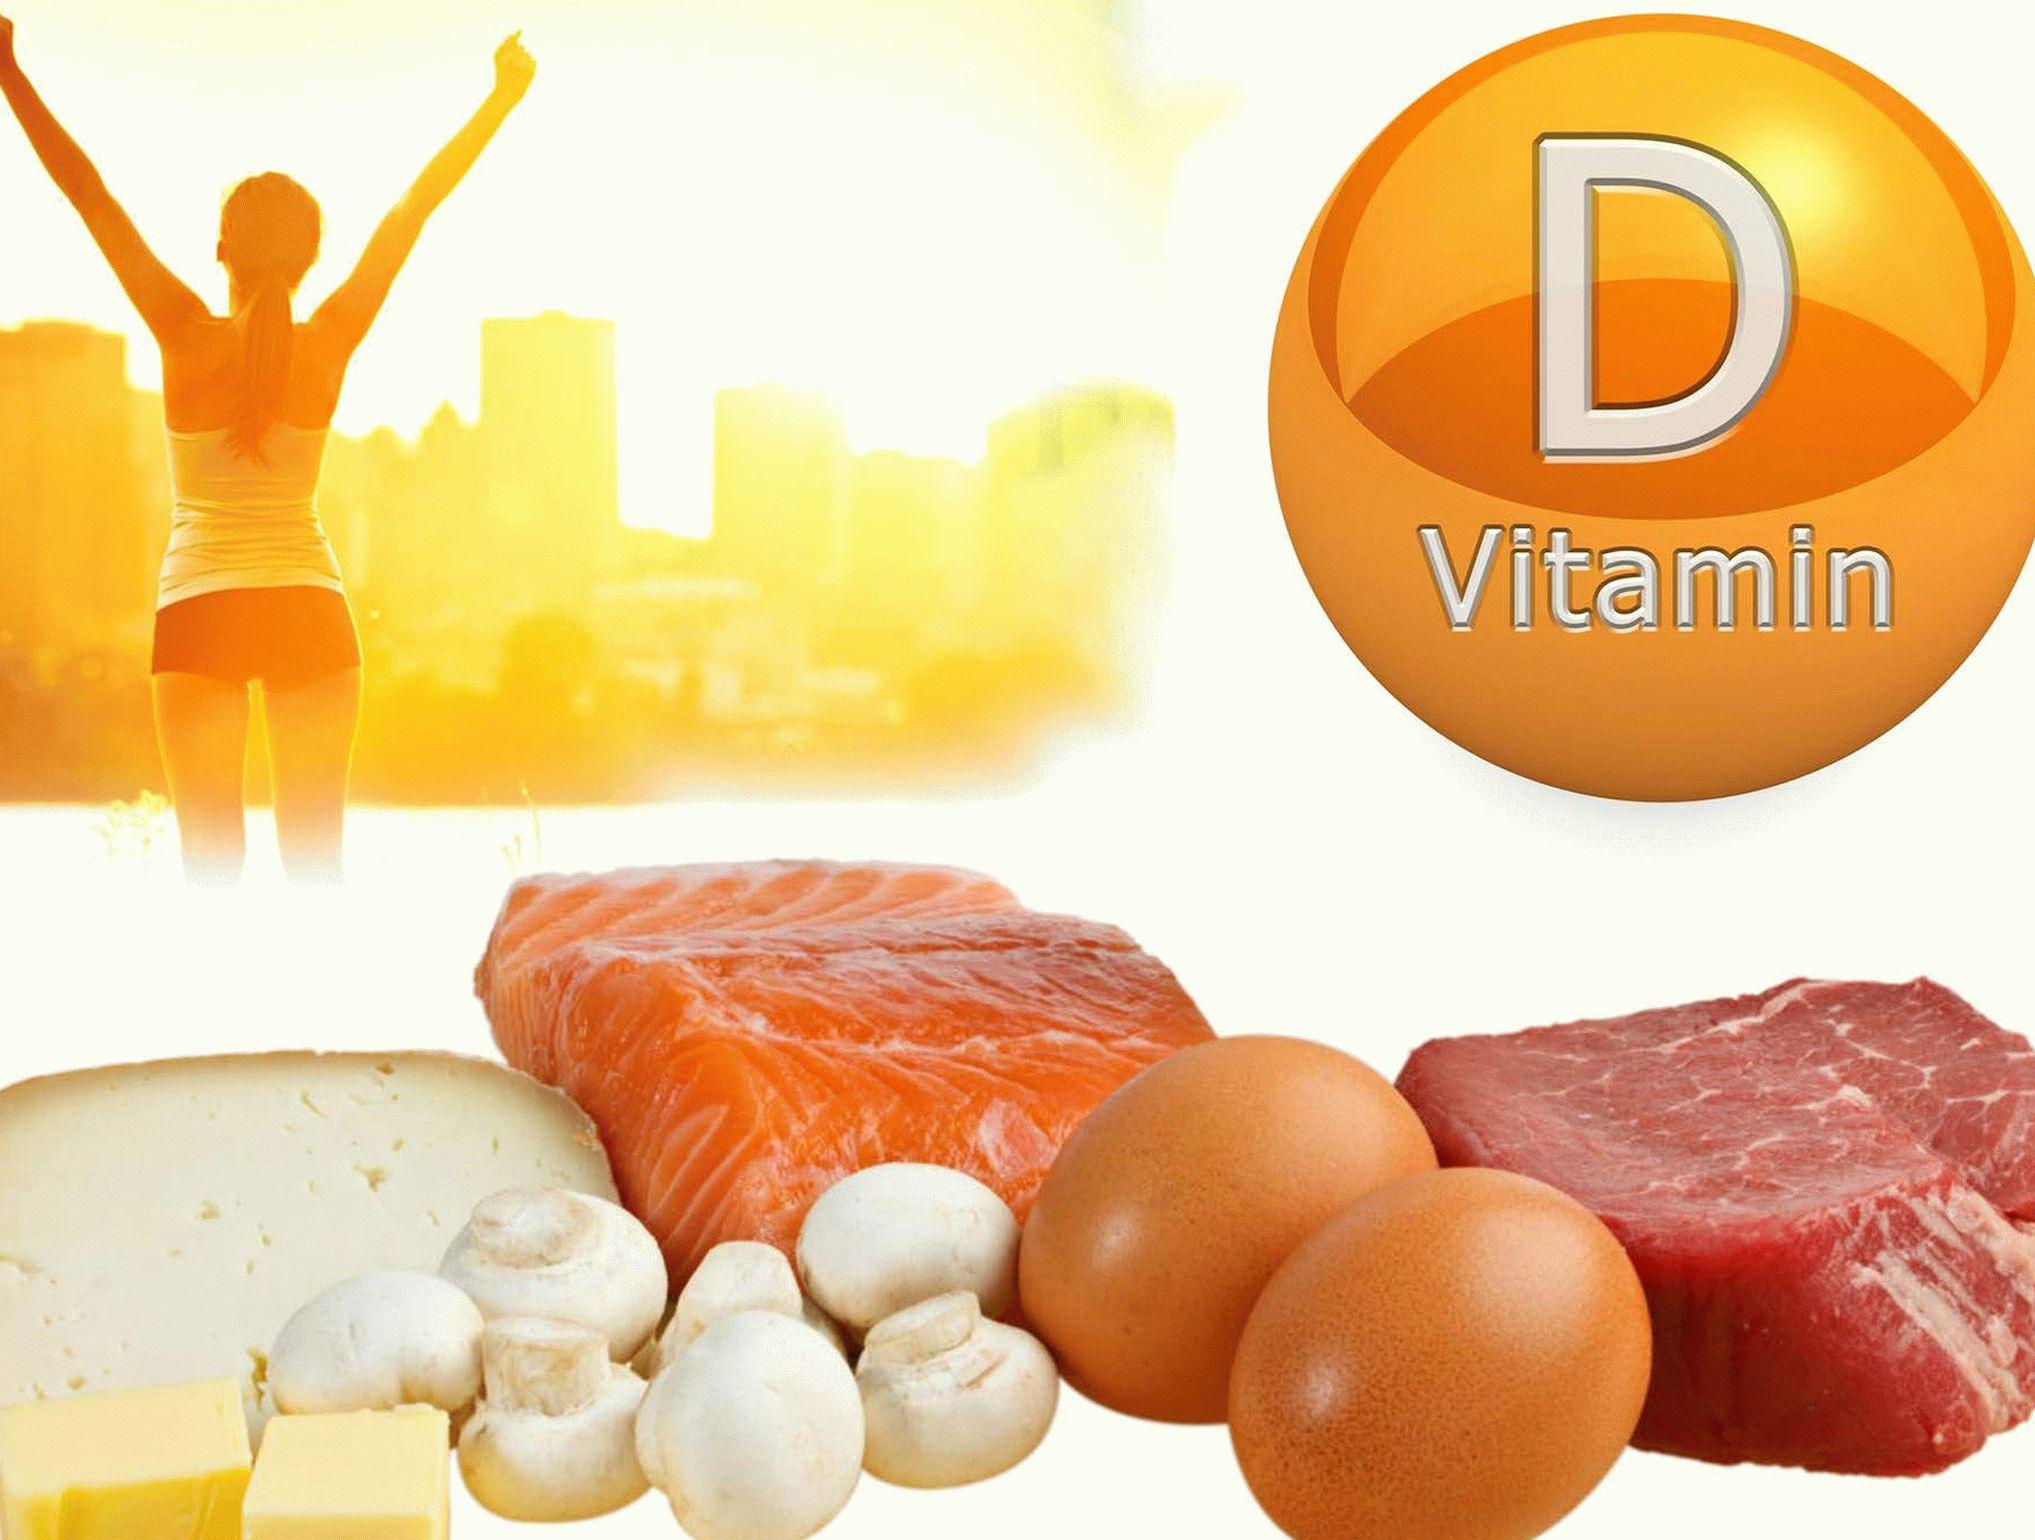 Vitamin com. Витамин д. Источники витамина д. Вит д. Витамин d источники витамина для организма.